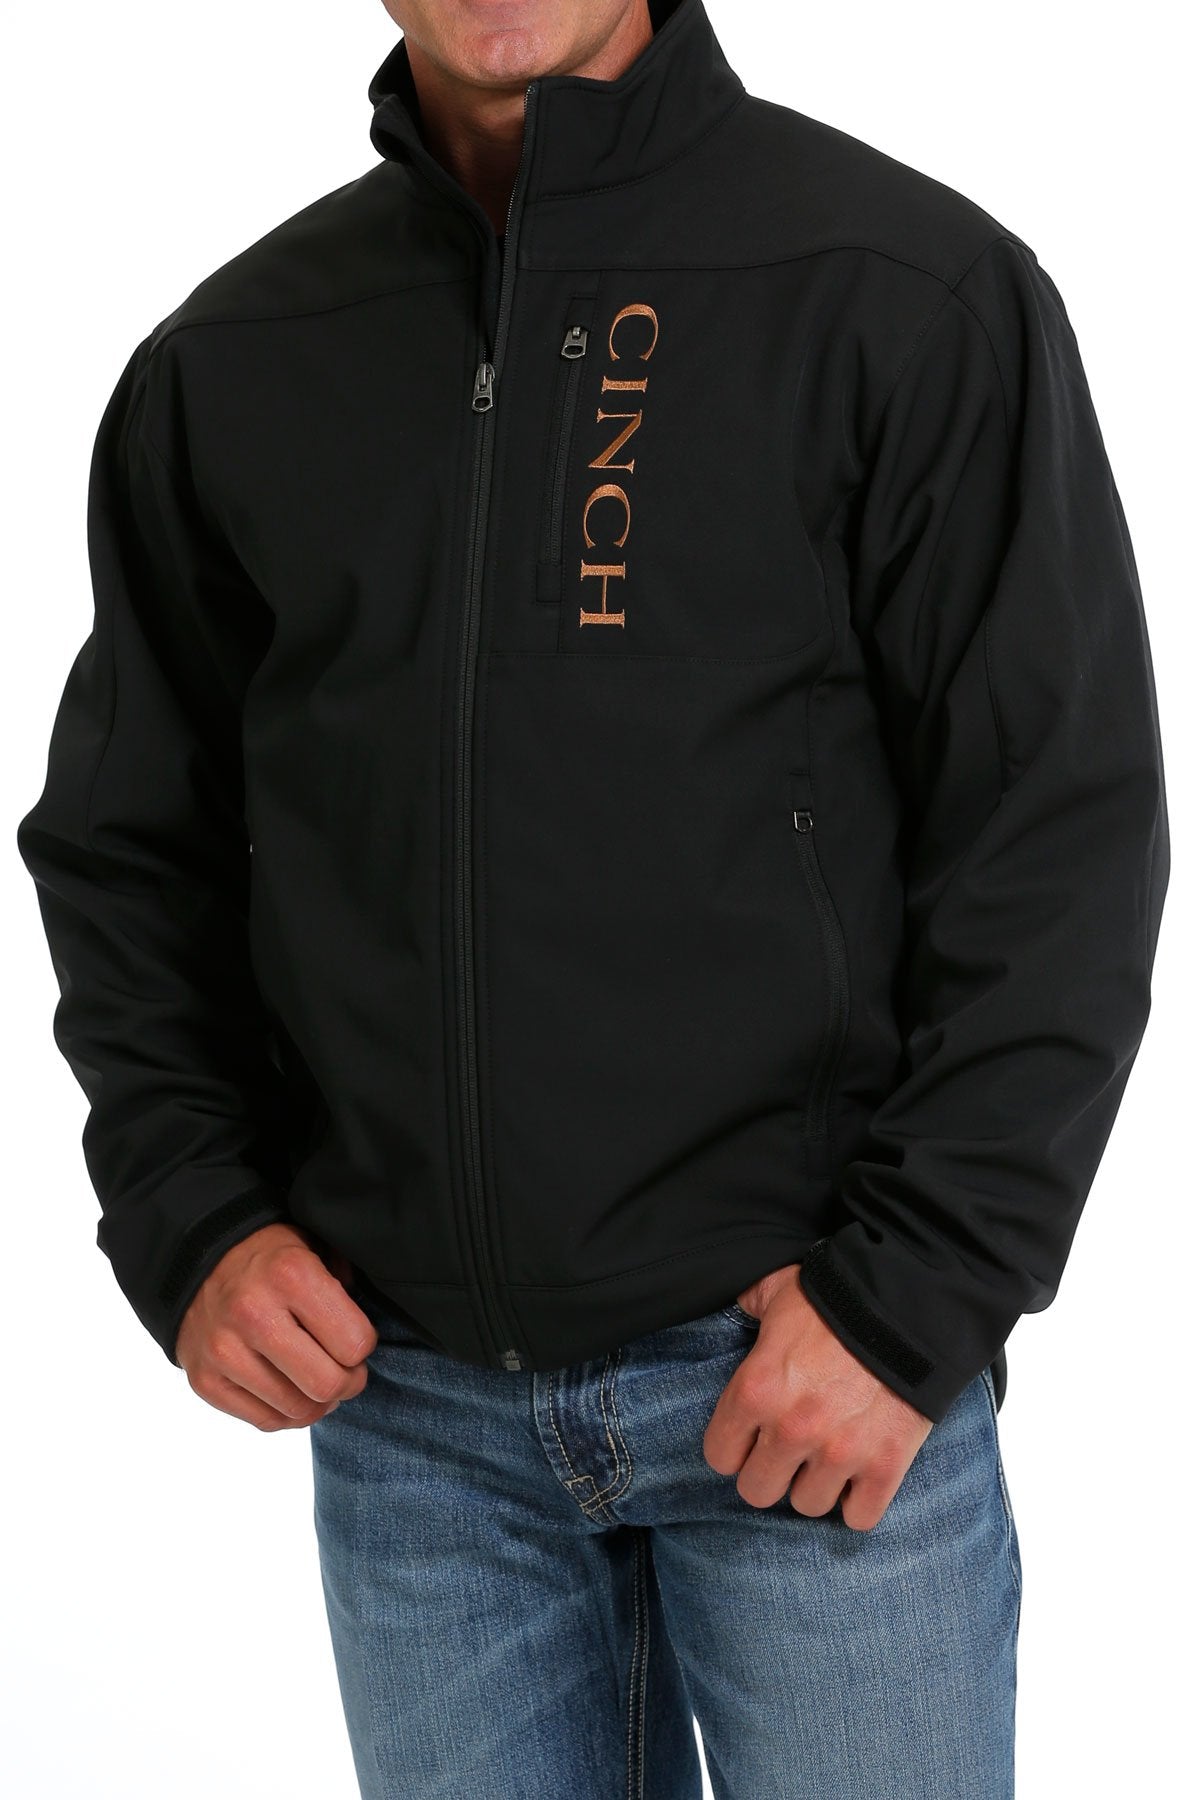 Cinch Men's Black Bonded Jacket w/Logo Embroidery